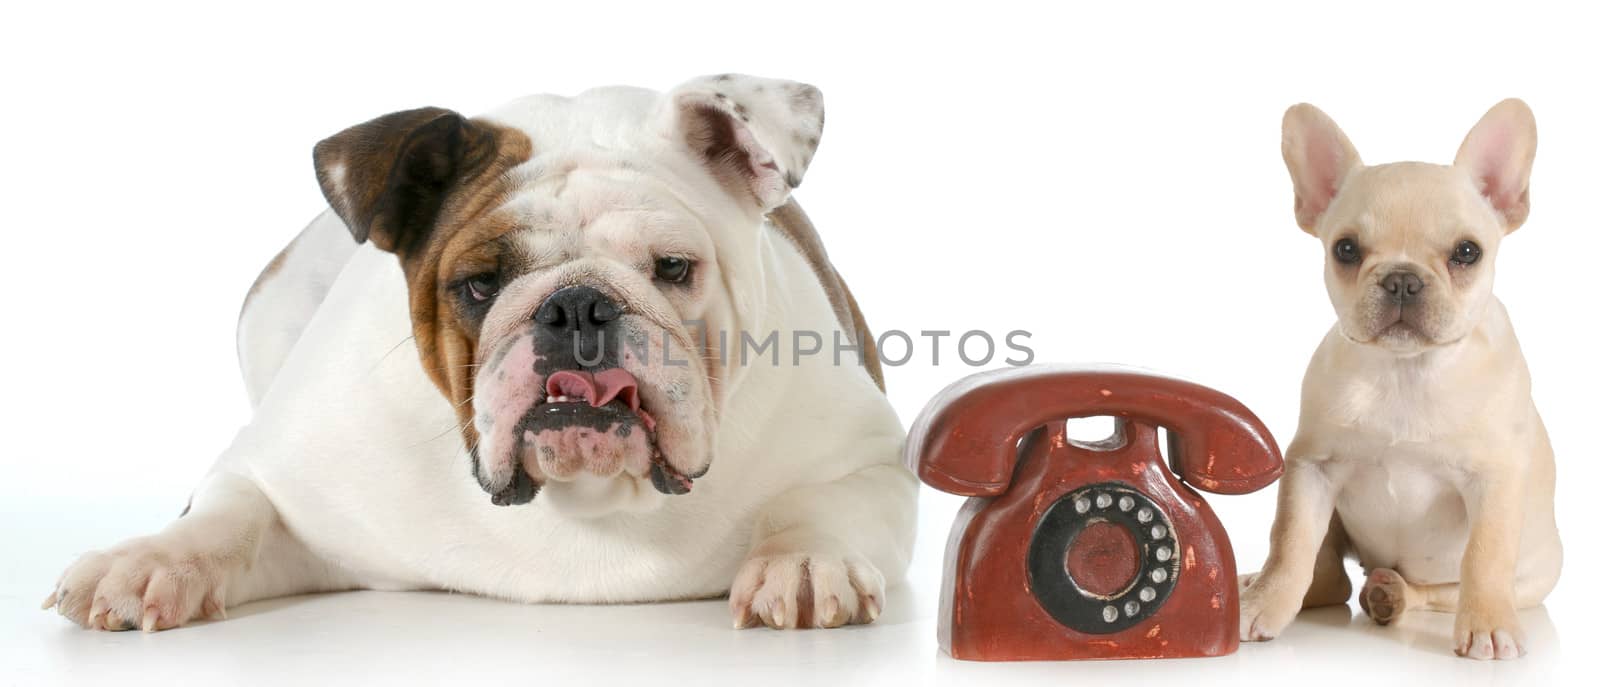 dog communication - english and french bulldog with telephone between them isolated on white background